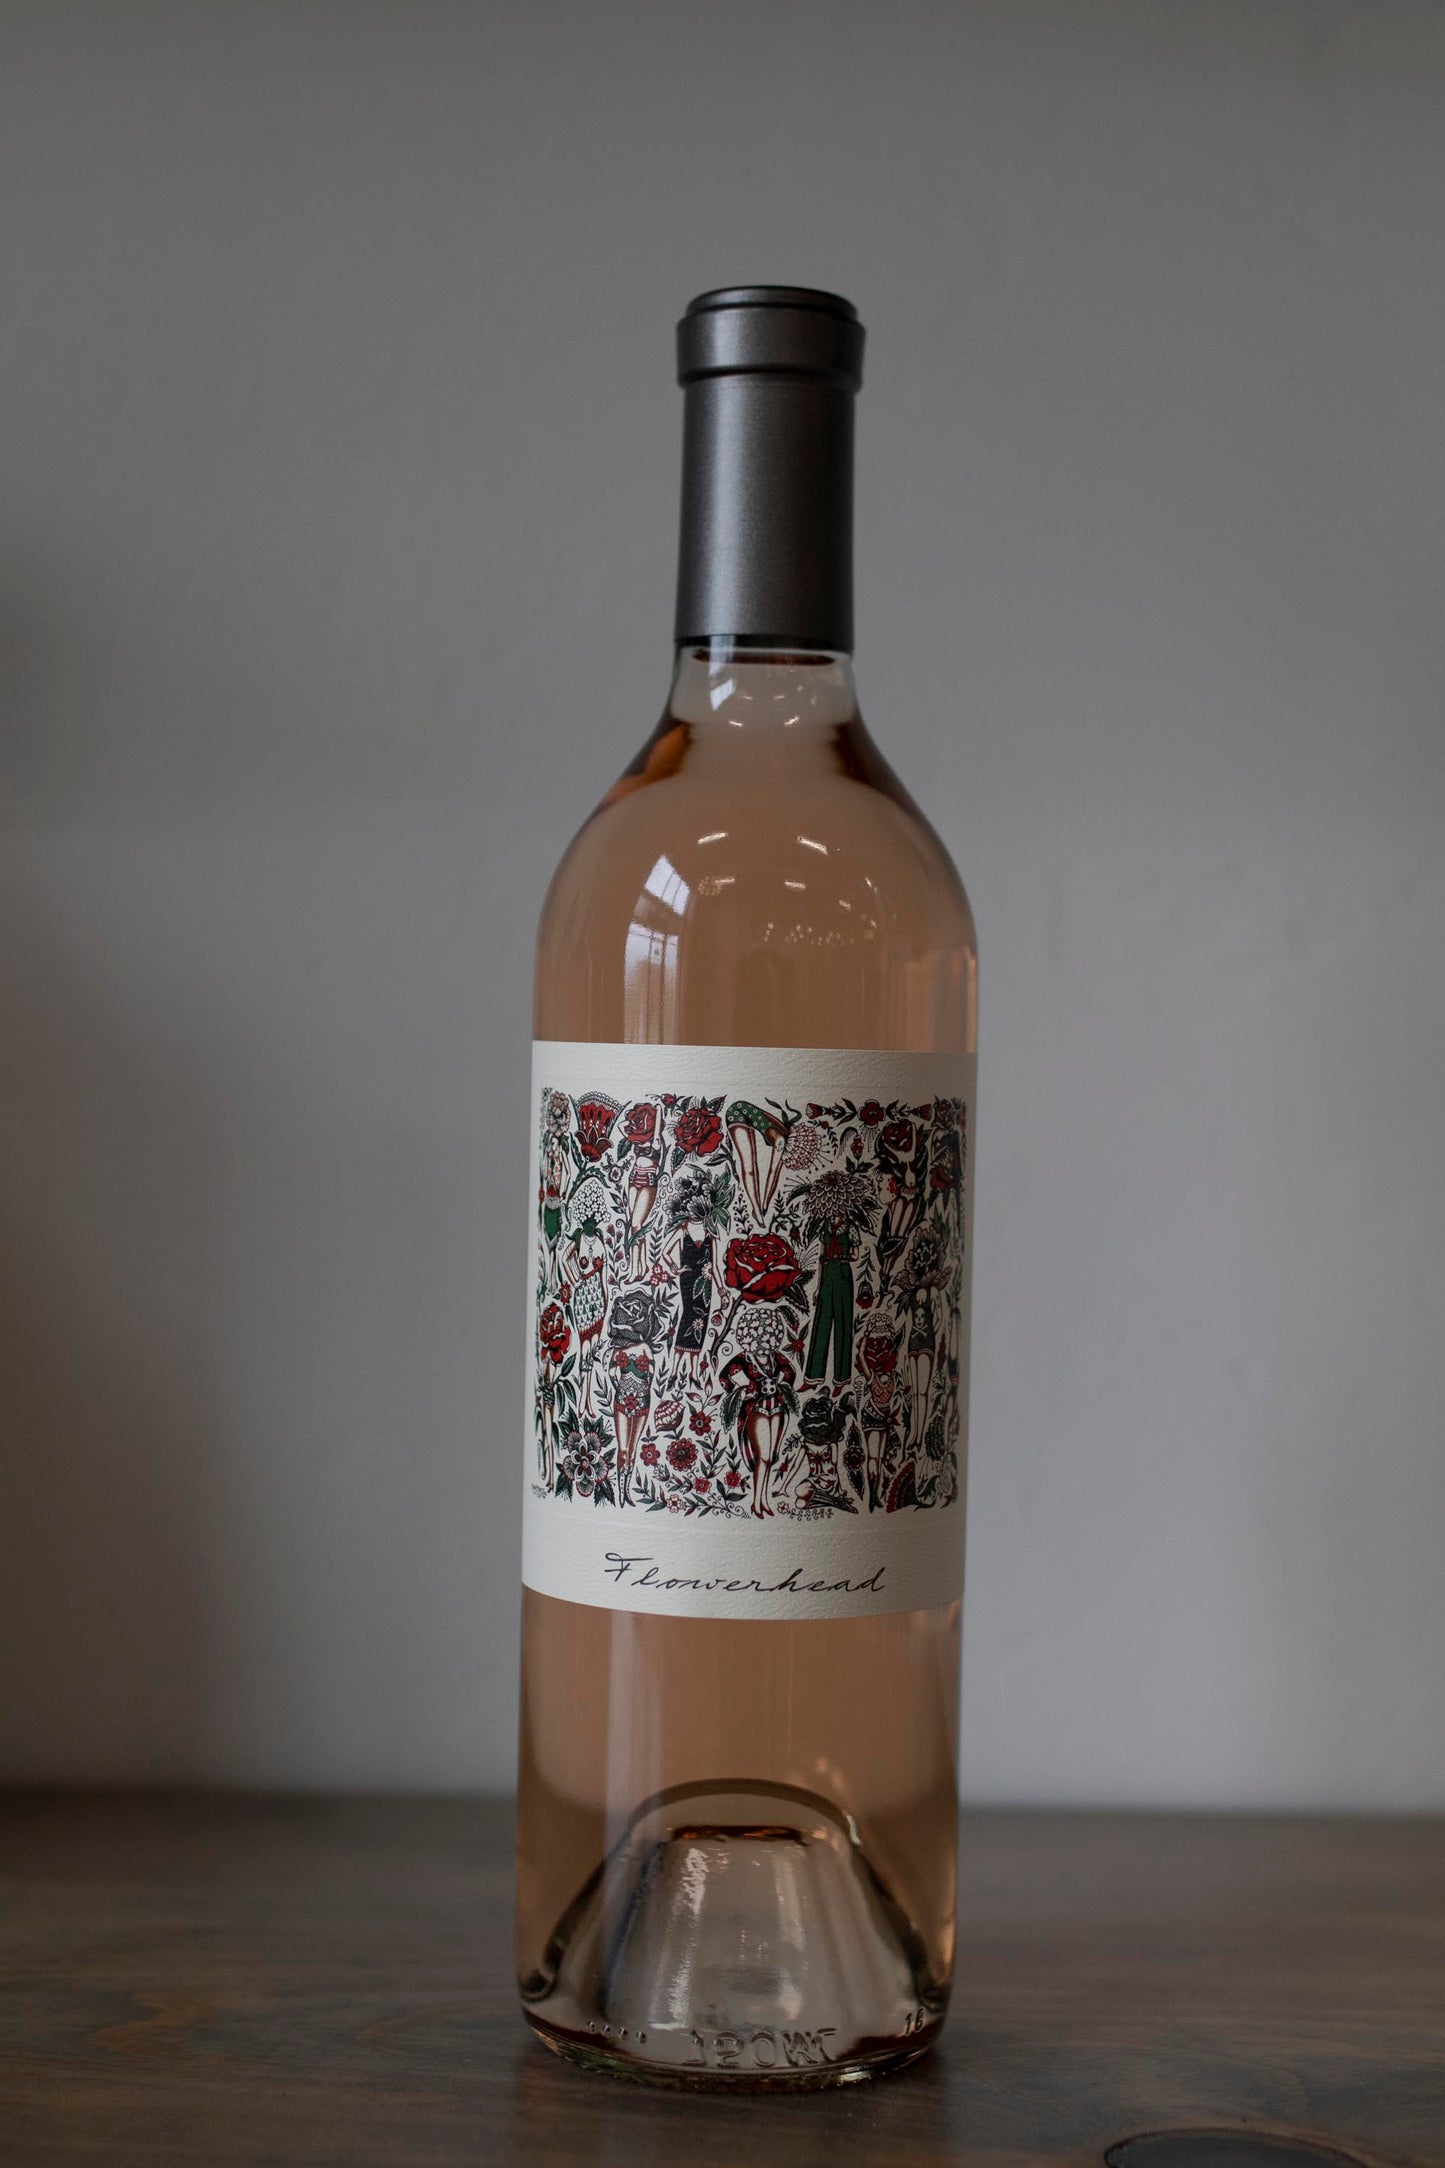 Bottle of Mark ryan Lu flowerhead rose found at Vine & Board in 3809 NW 166th St Suite 1, Edmond, OK 73012